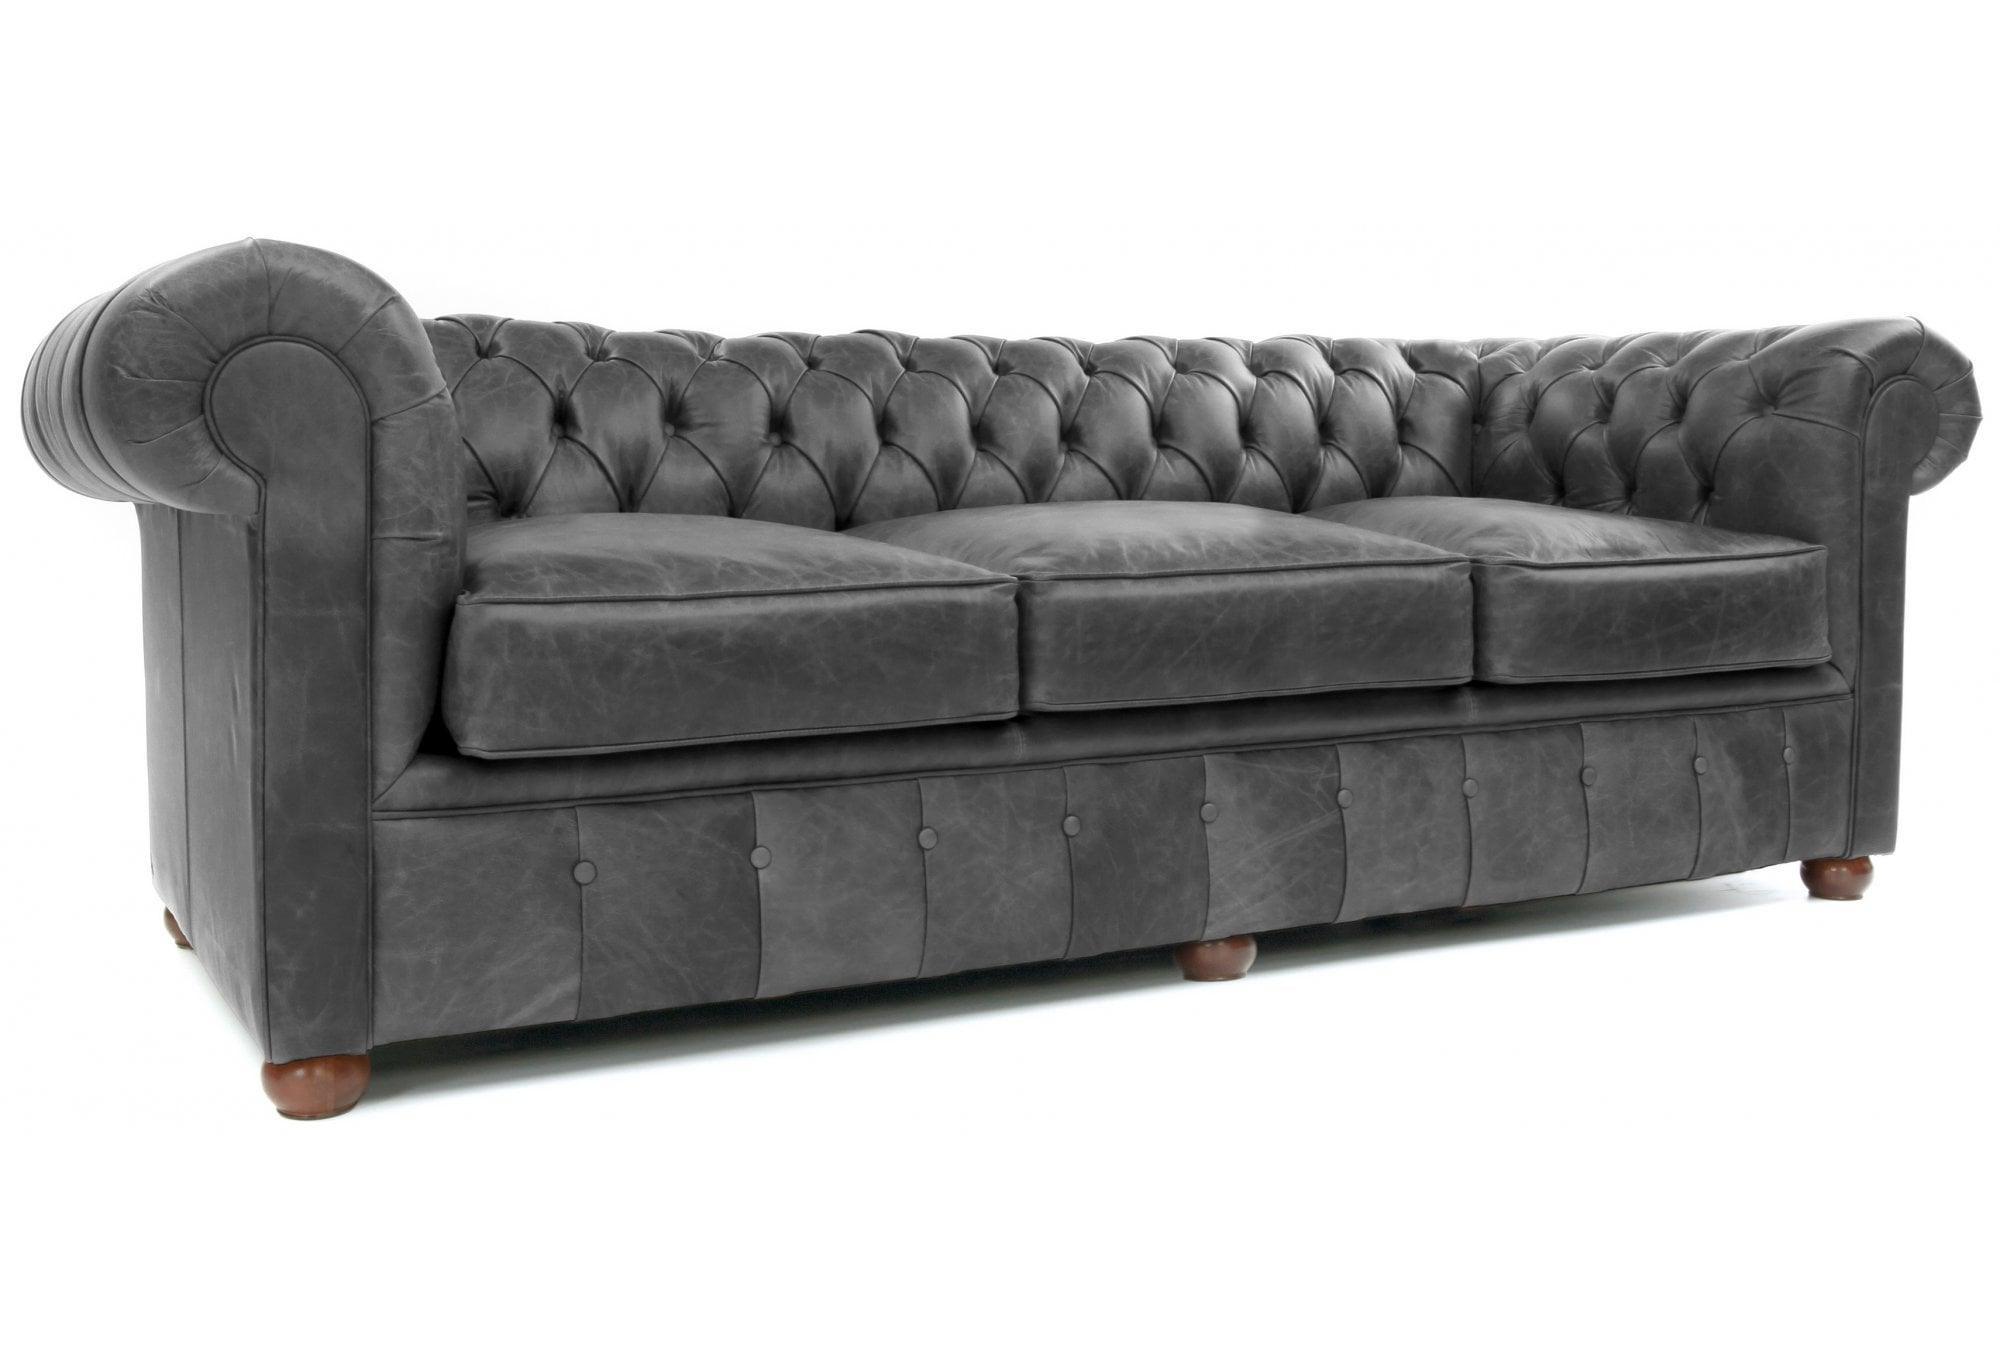 108" Wide Vintage Gray Chesterfield Leather Sofa Custom Made - Uptown Sebastian